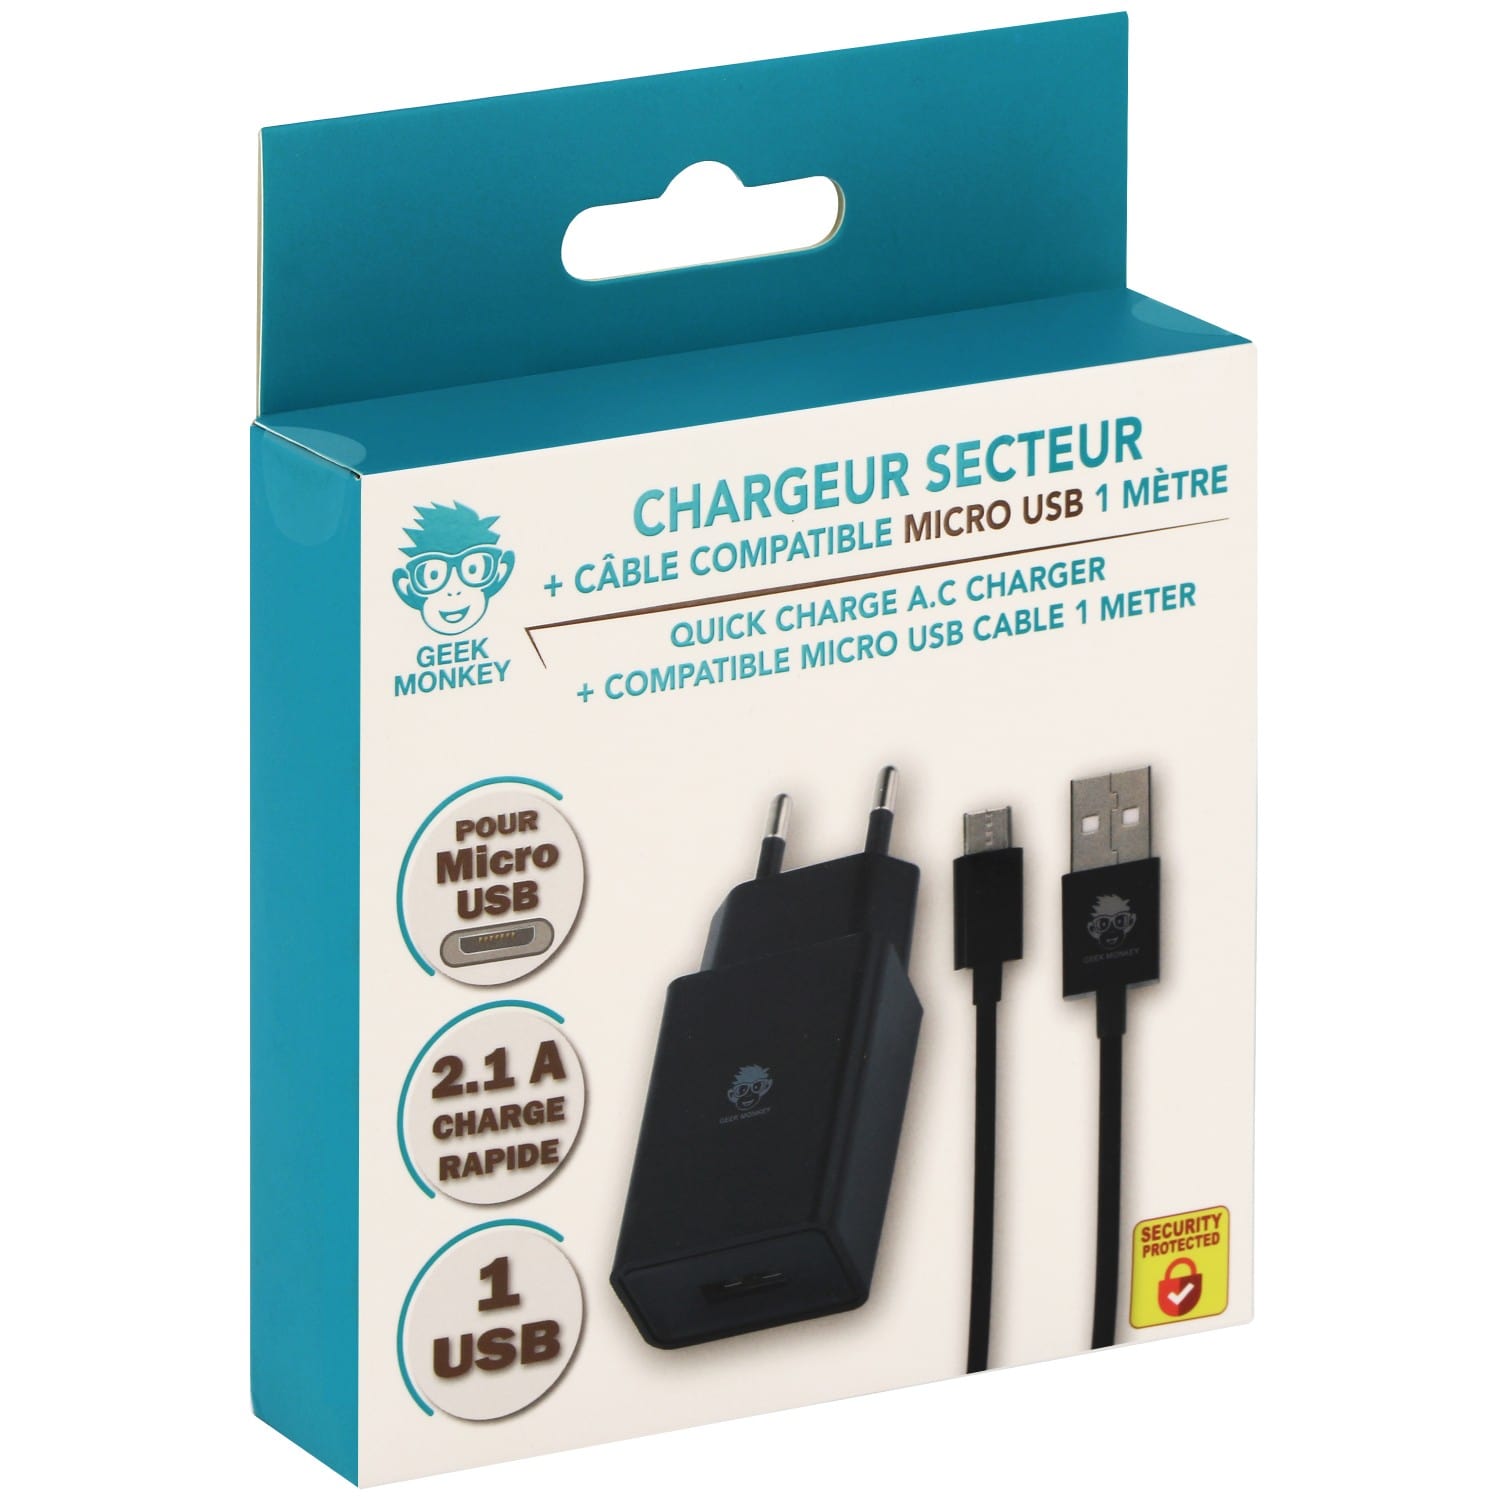 Chargeur GEEK MONKEY secteur USB-A 2.1 + câble Micro USB - 1 mètre - Noir